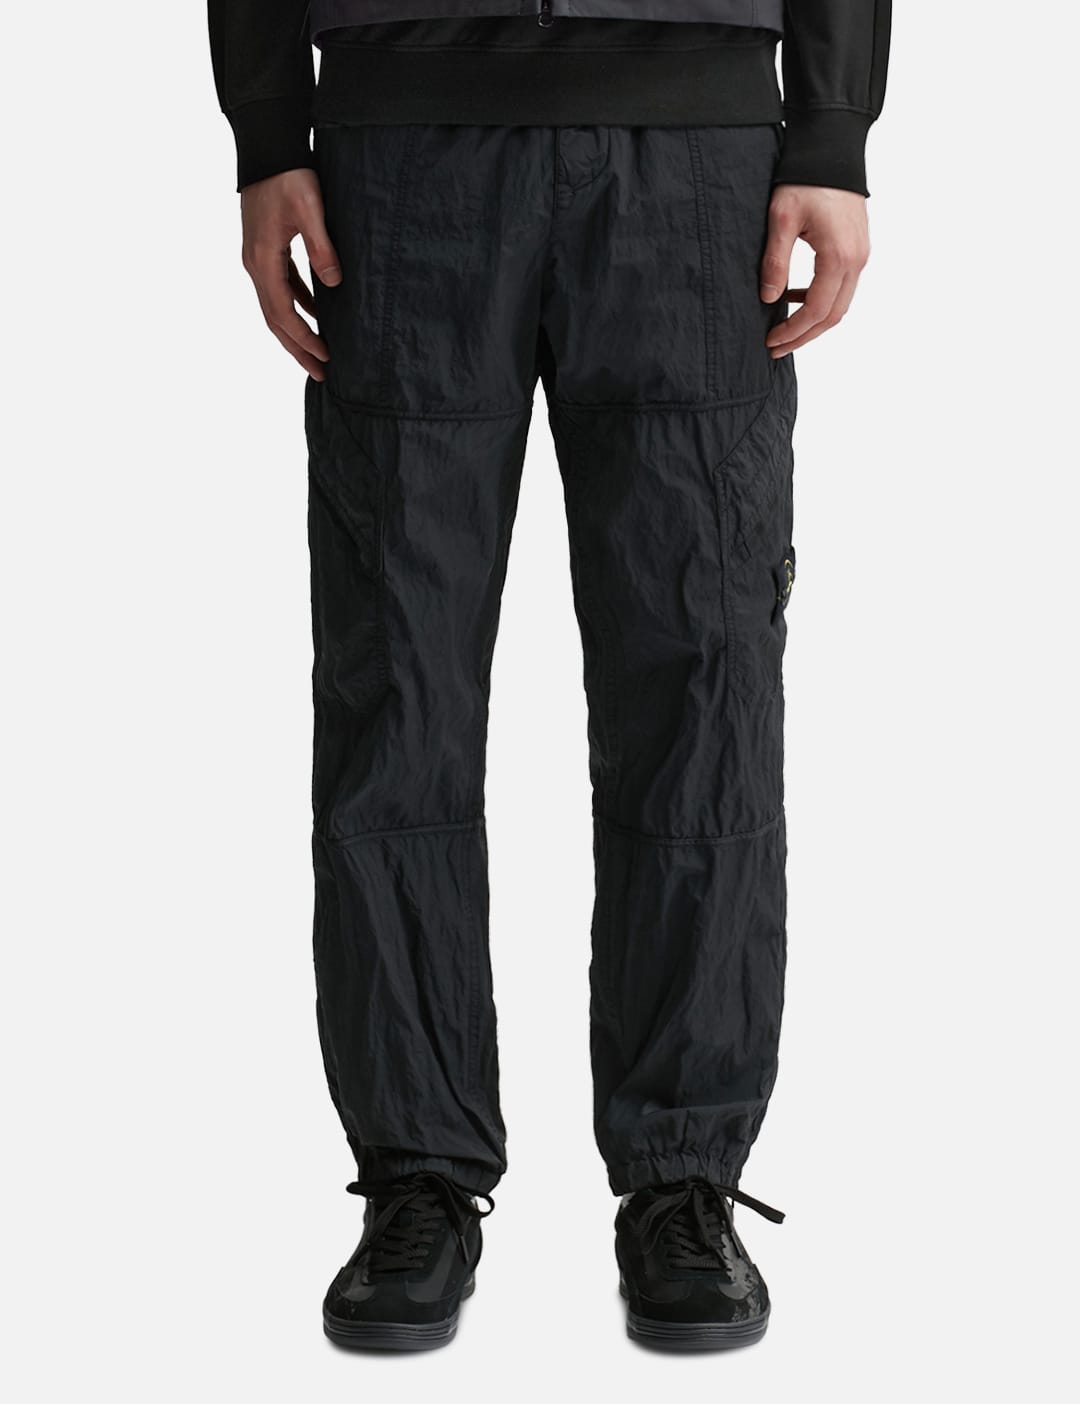 Jet Black Nylon Sweatpants Small Baggy Fit Track Pants Mesh Lined Cabelas |  eBay